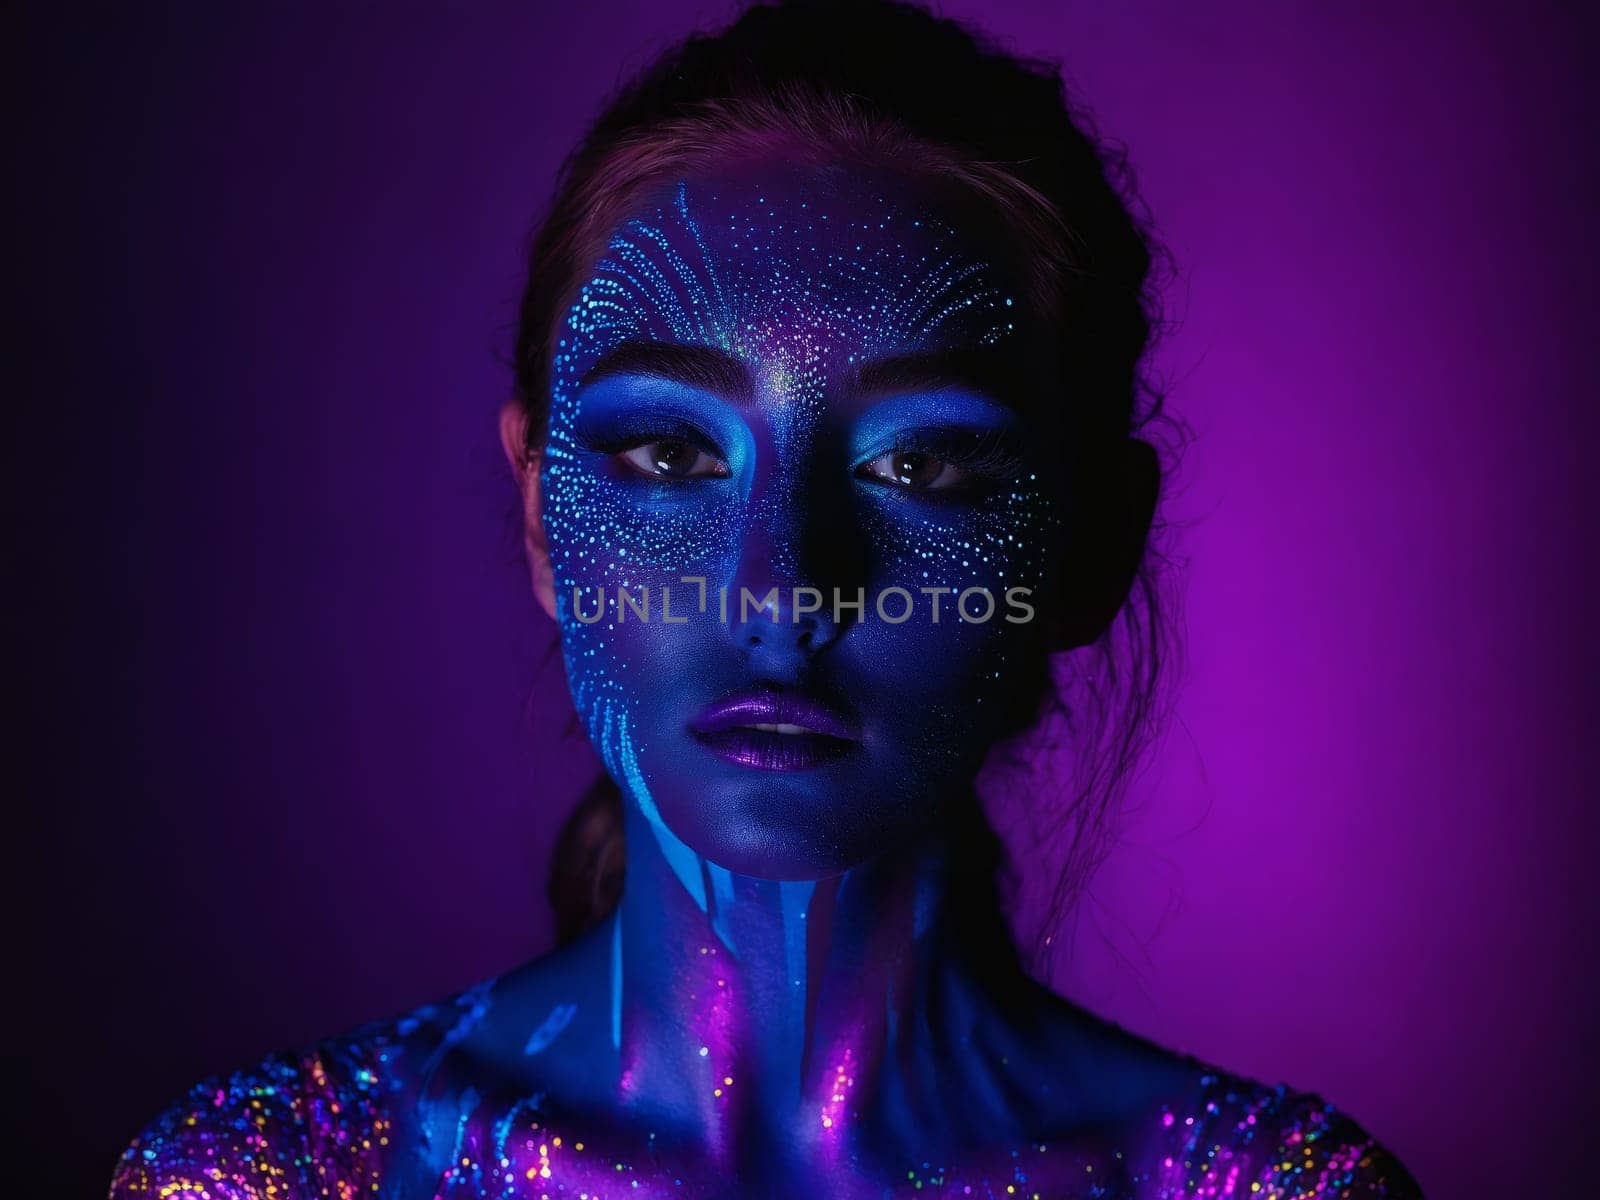 Neon body painting fluorescent designs glowing under black light UV reactive makeup dark studio by panophotograph